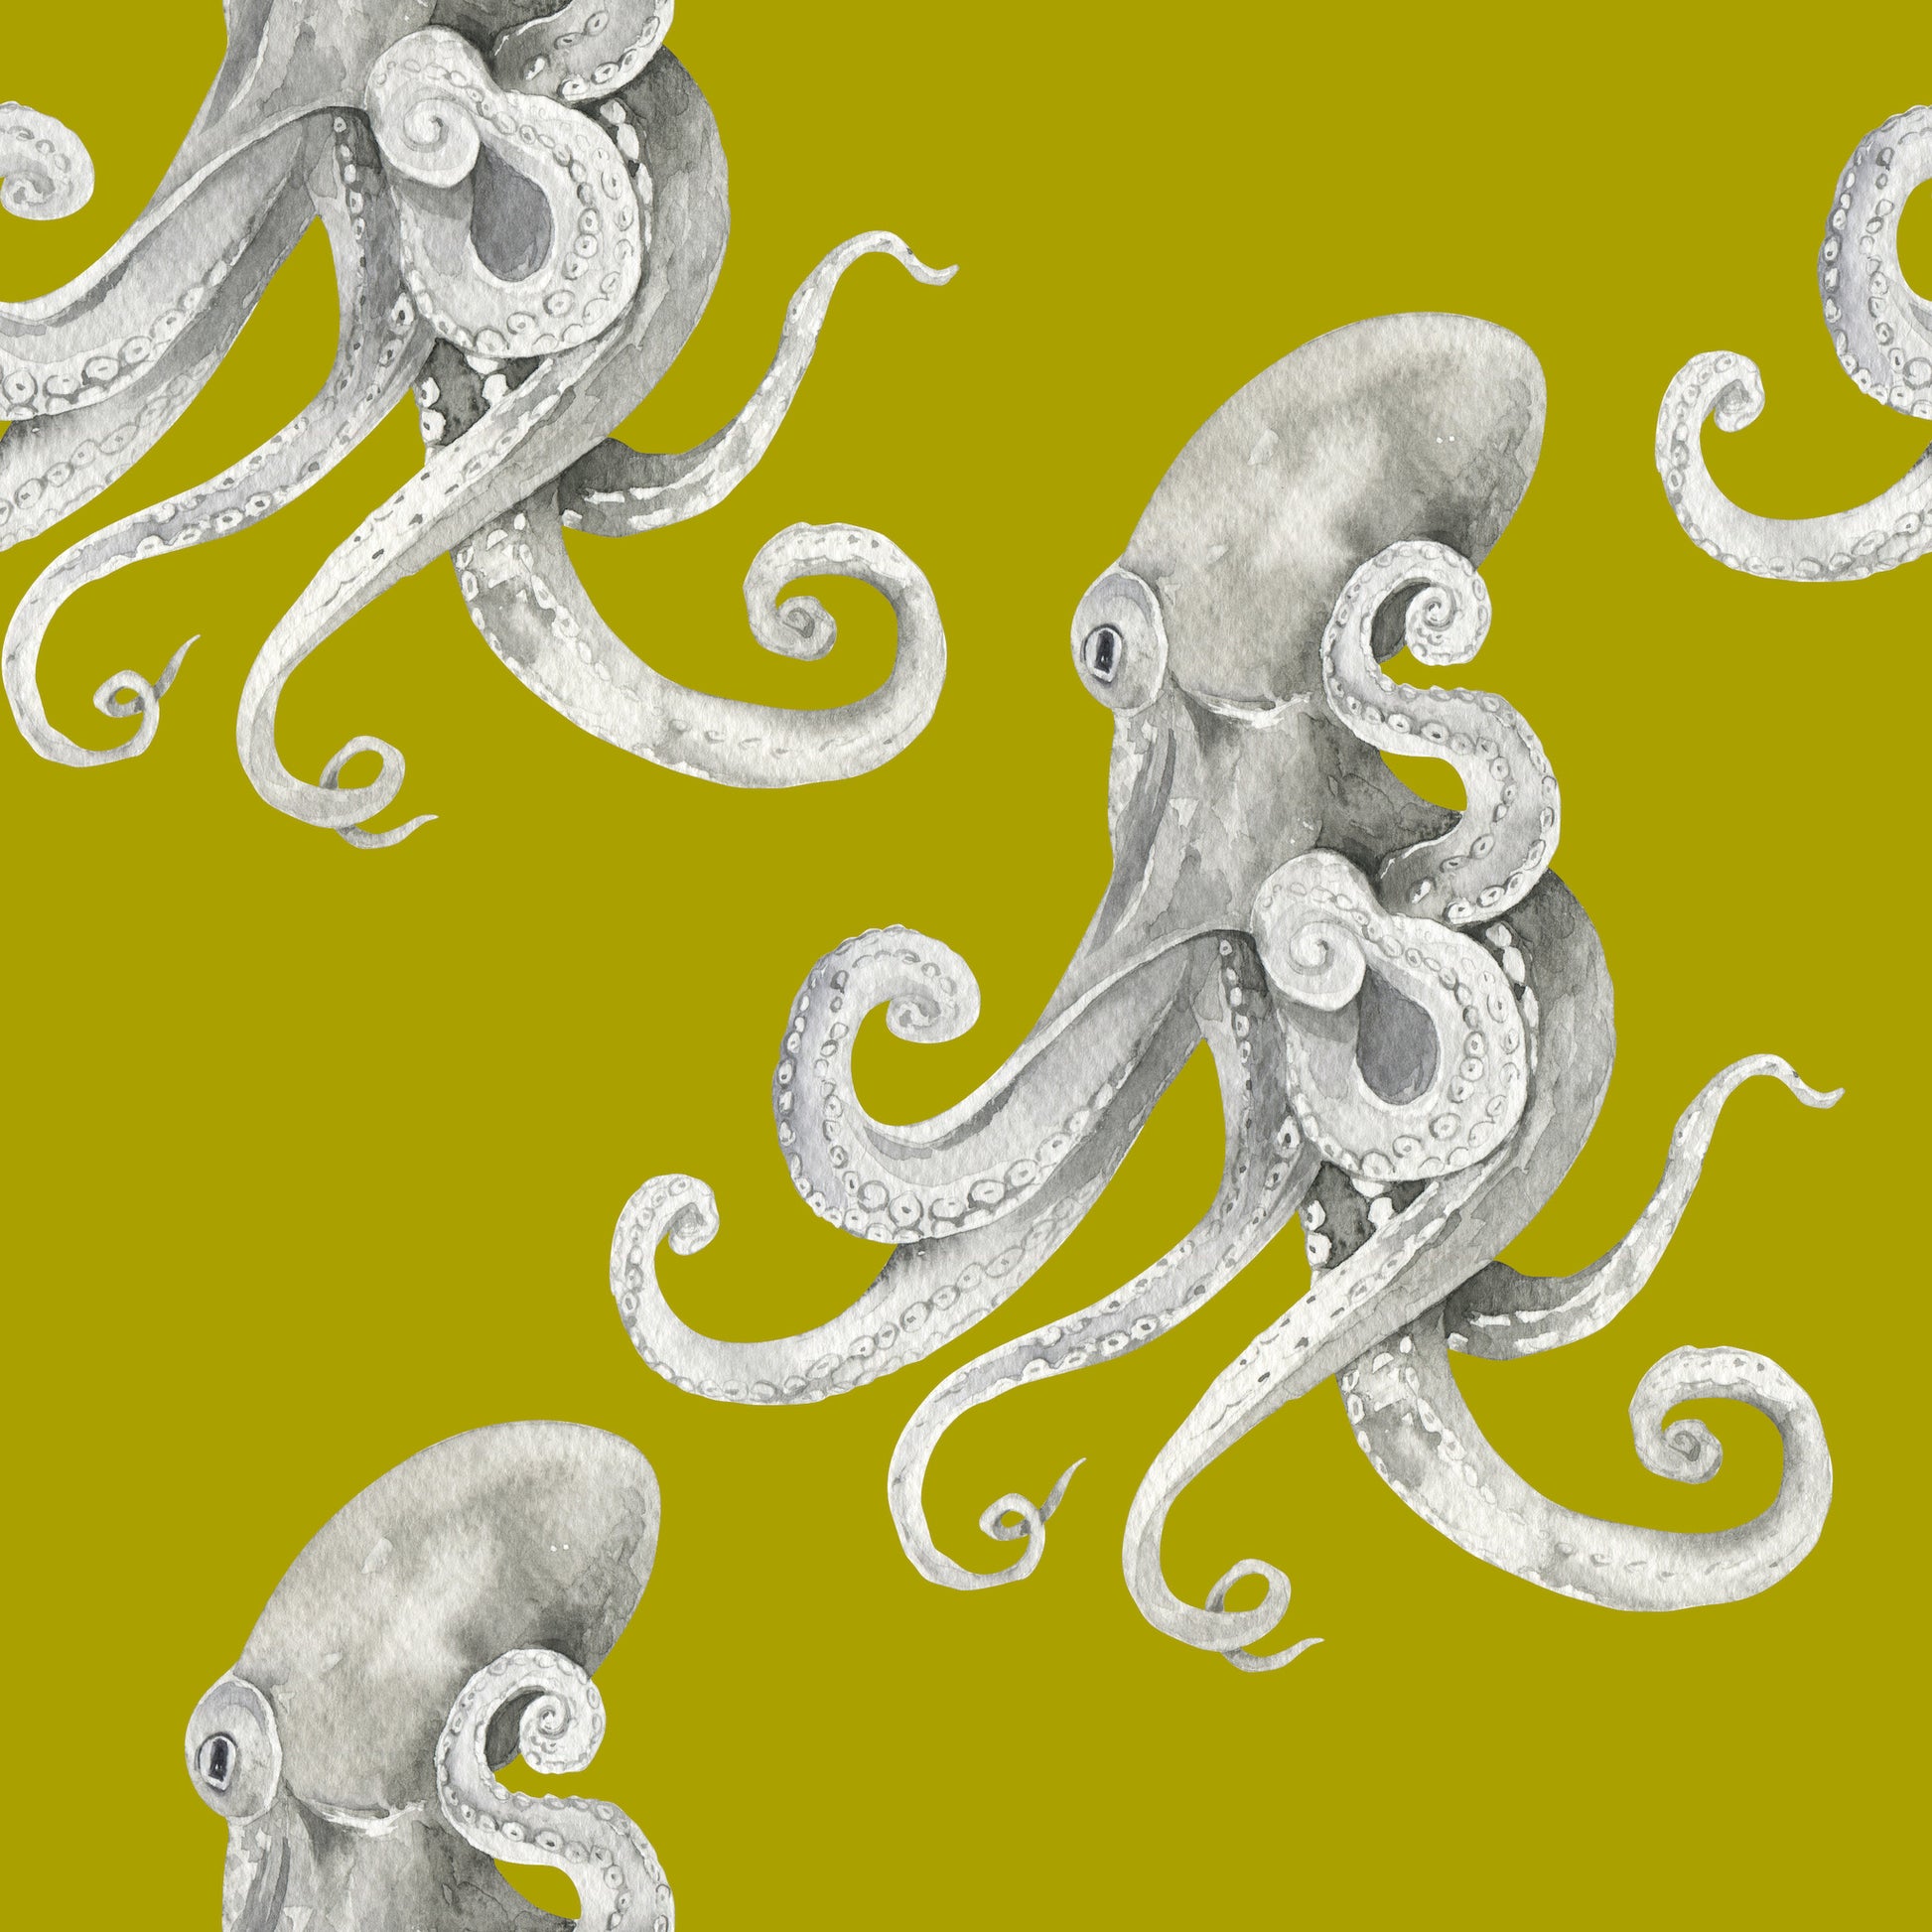 ocean octopus kraken wallpaper yellow mustard removable peel and stick